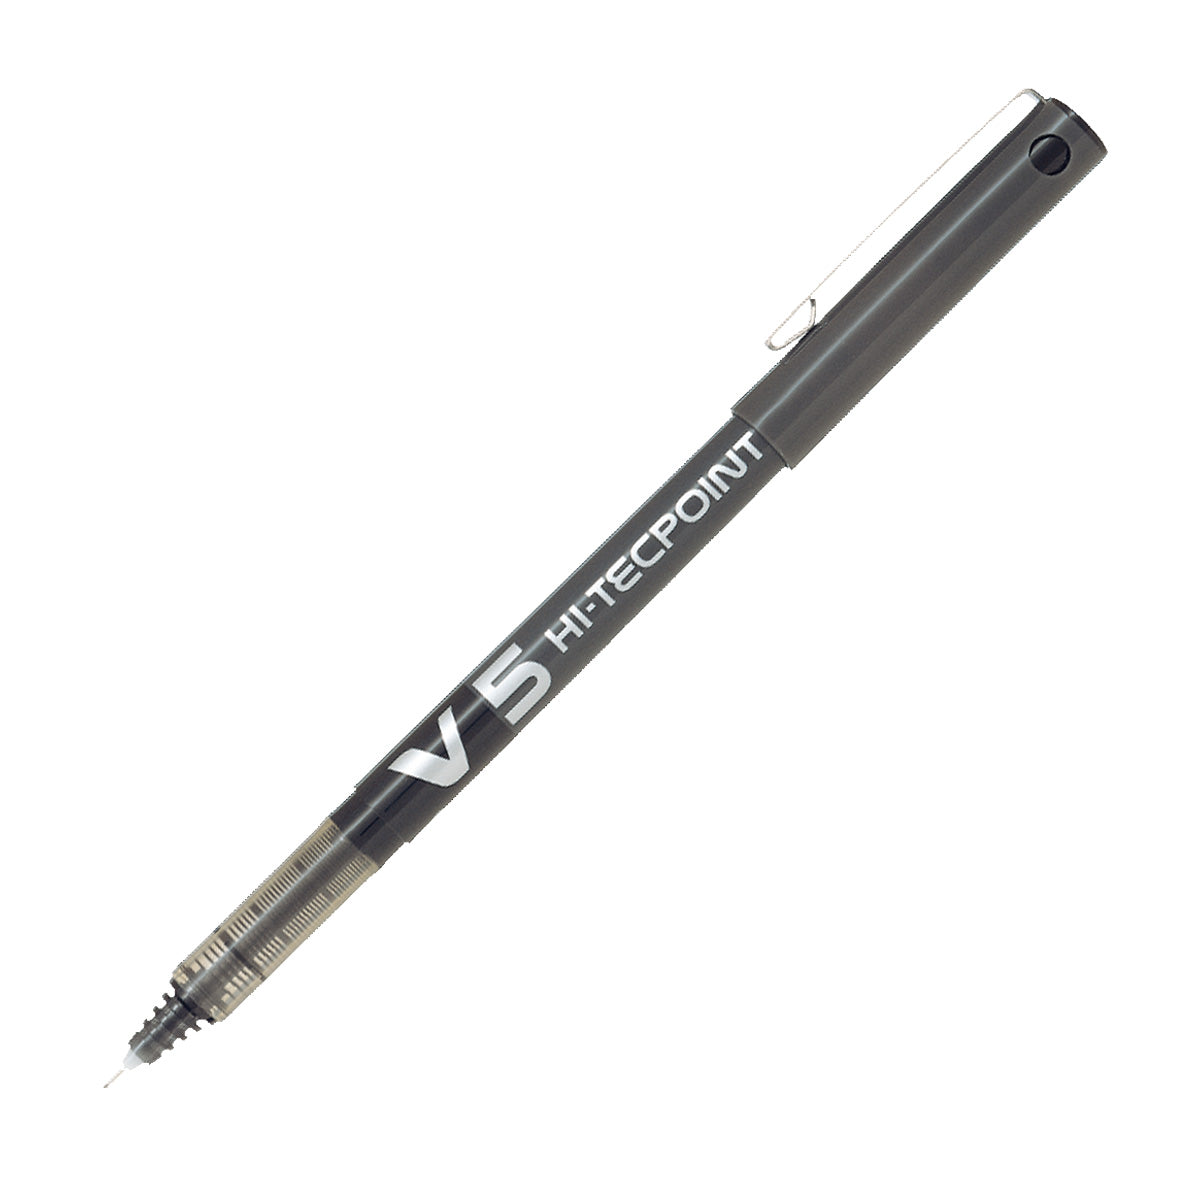 Pilot Hi-Tecpoint V5 - Liquid Ink Rollerball pen - Black - Fine Tip - 5x Pack